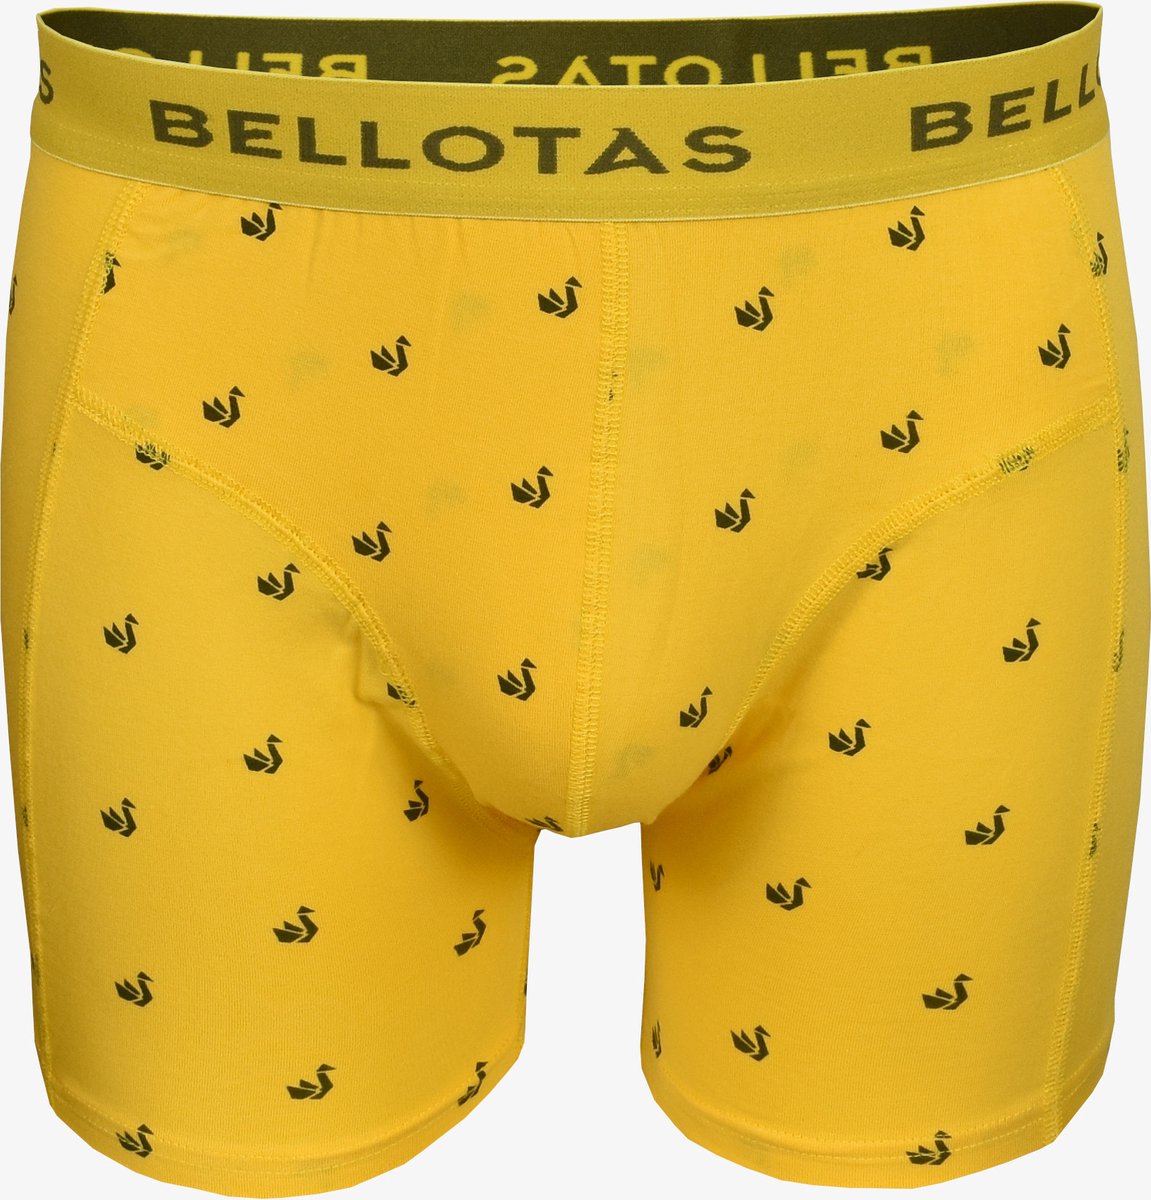 Bellotas - Boxershort - Odile XL